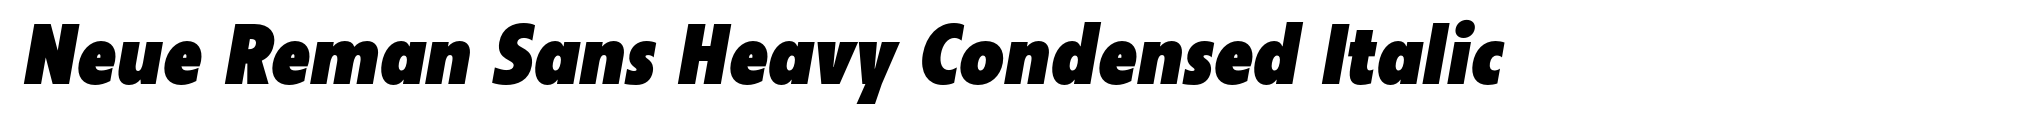 Neue Reman Sans Heavy Condensed Italic image